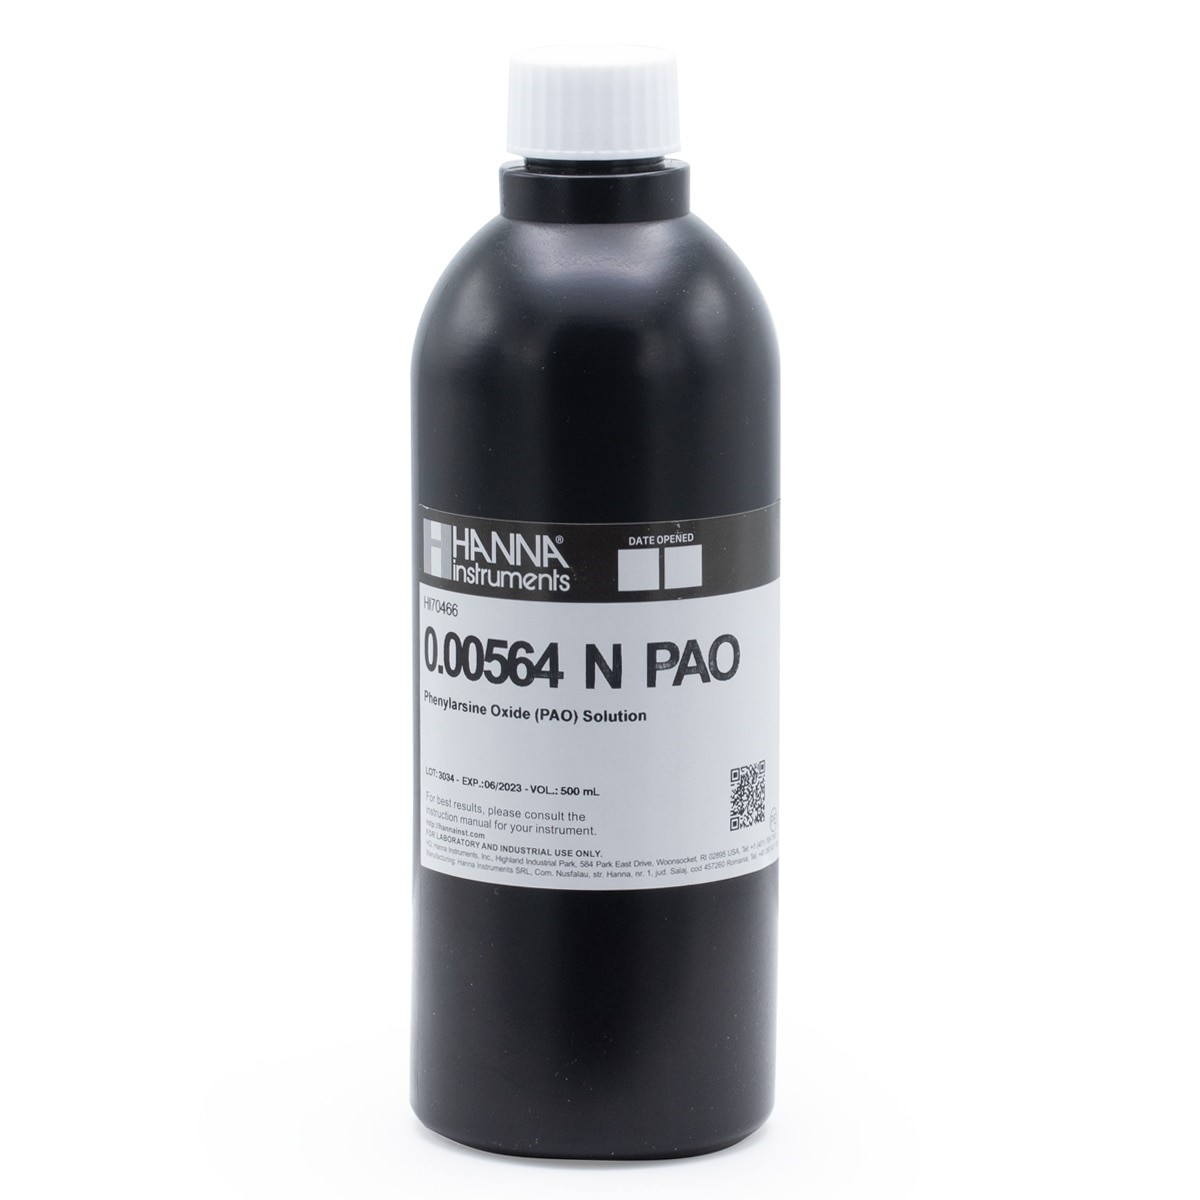 Phenylarsine Oxide (PAO) Solution (0.00564N), 500 mL - HI70466